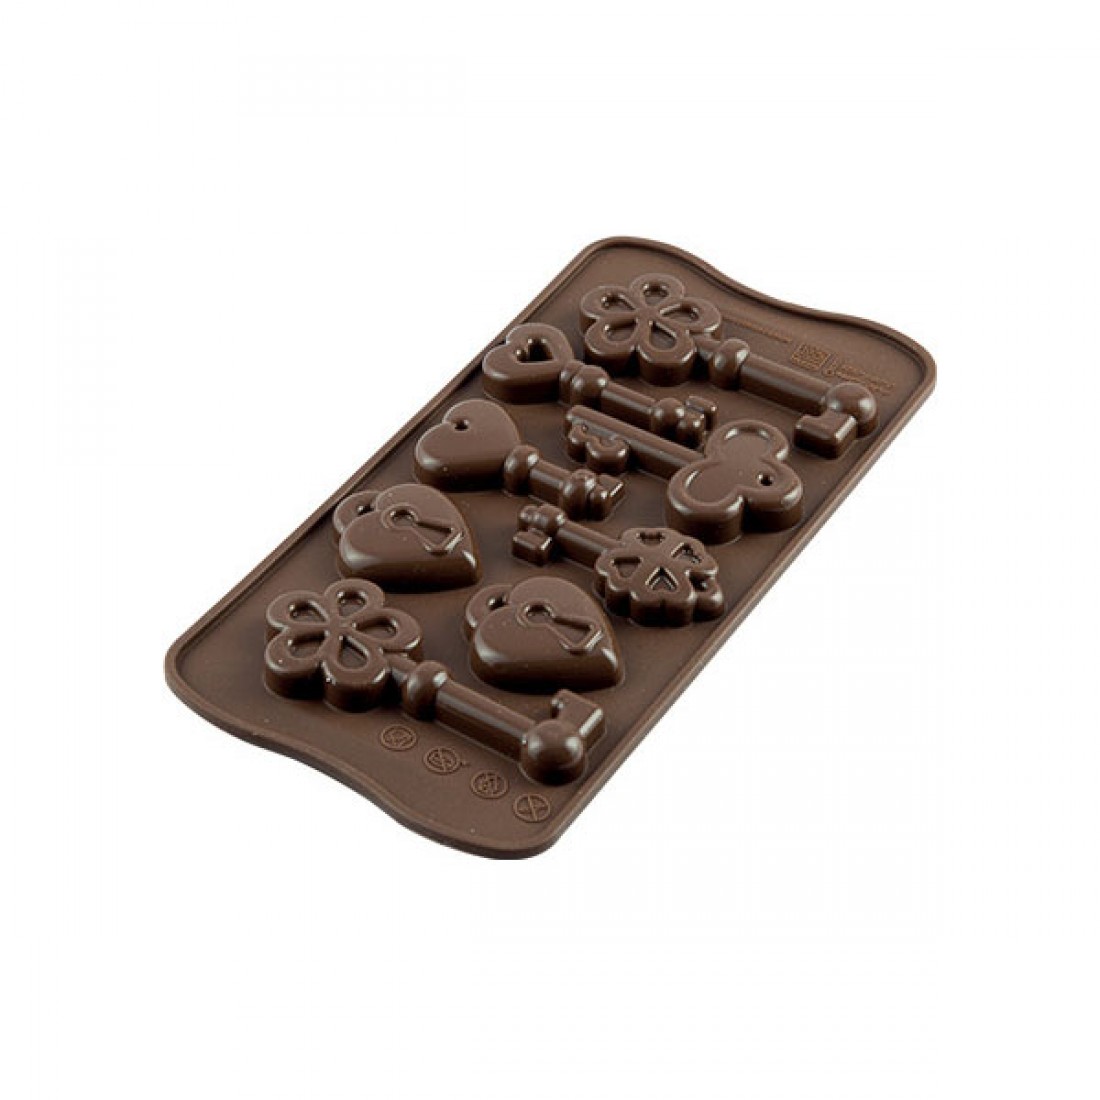 Форма для шоколадных фигурок ИЗИ-ШОК ключи